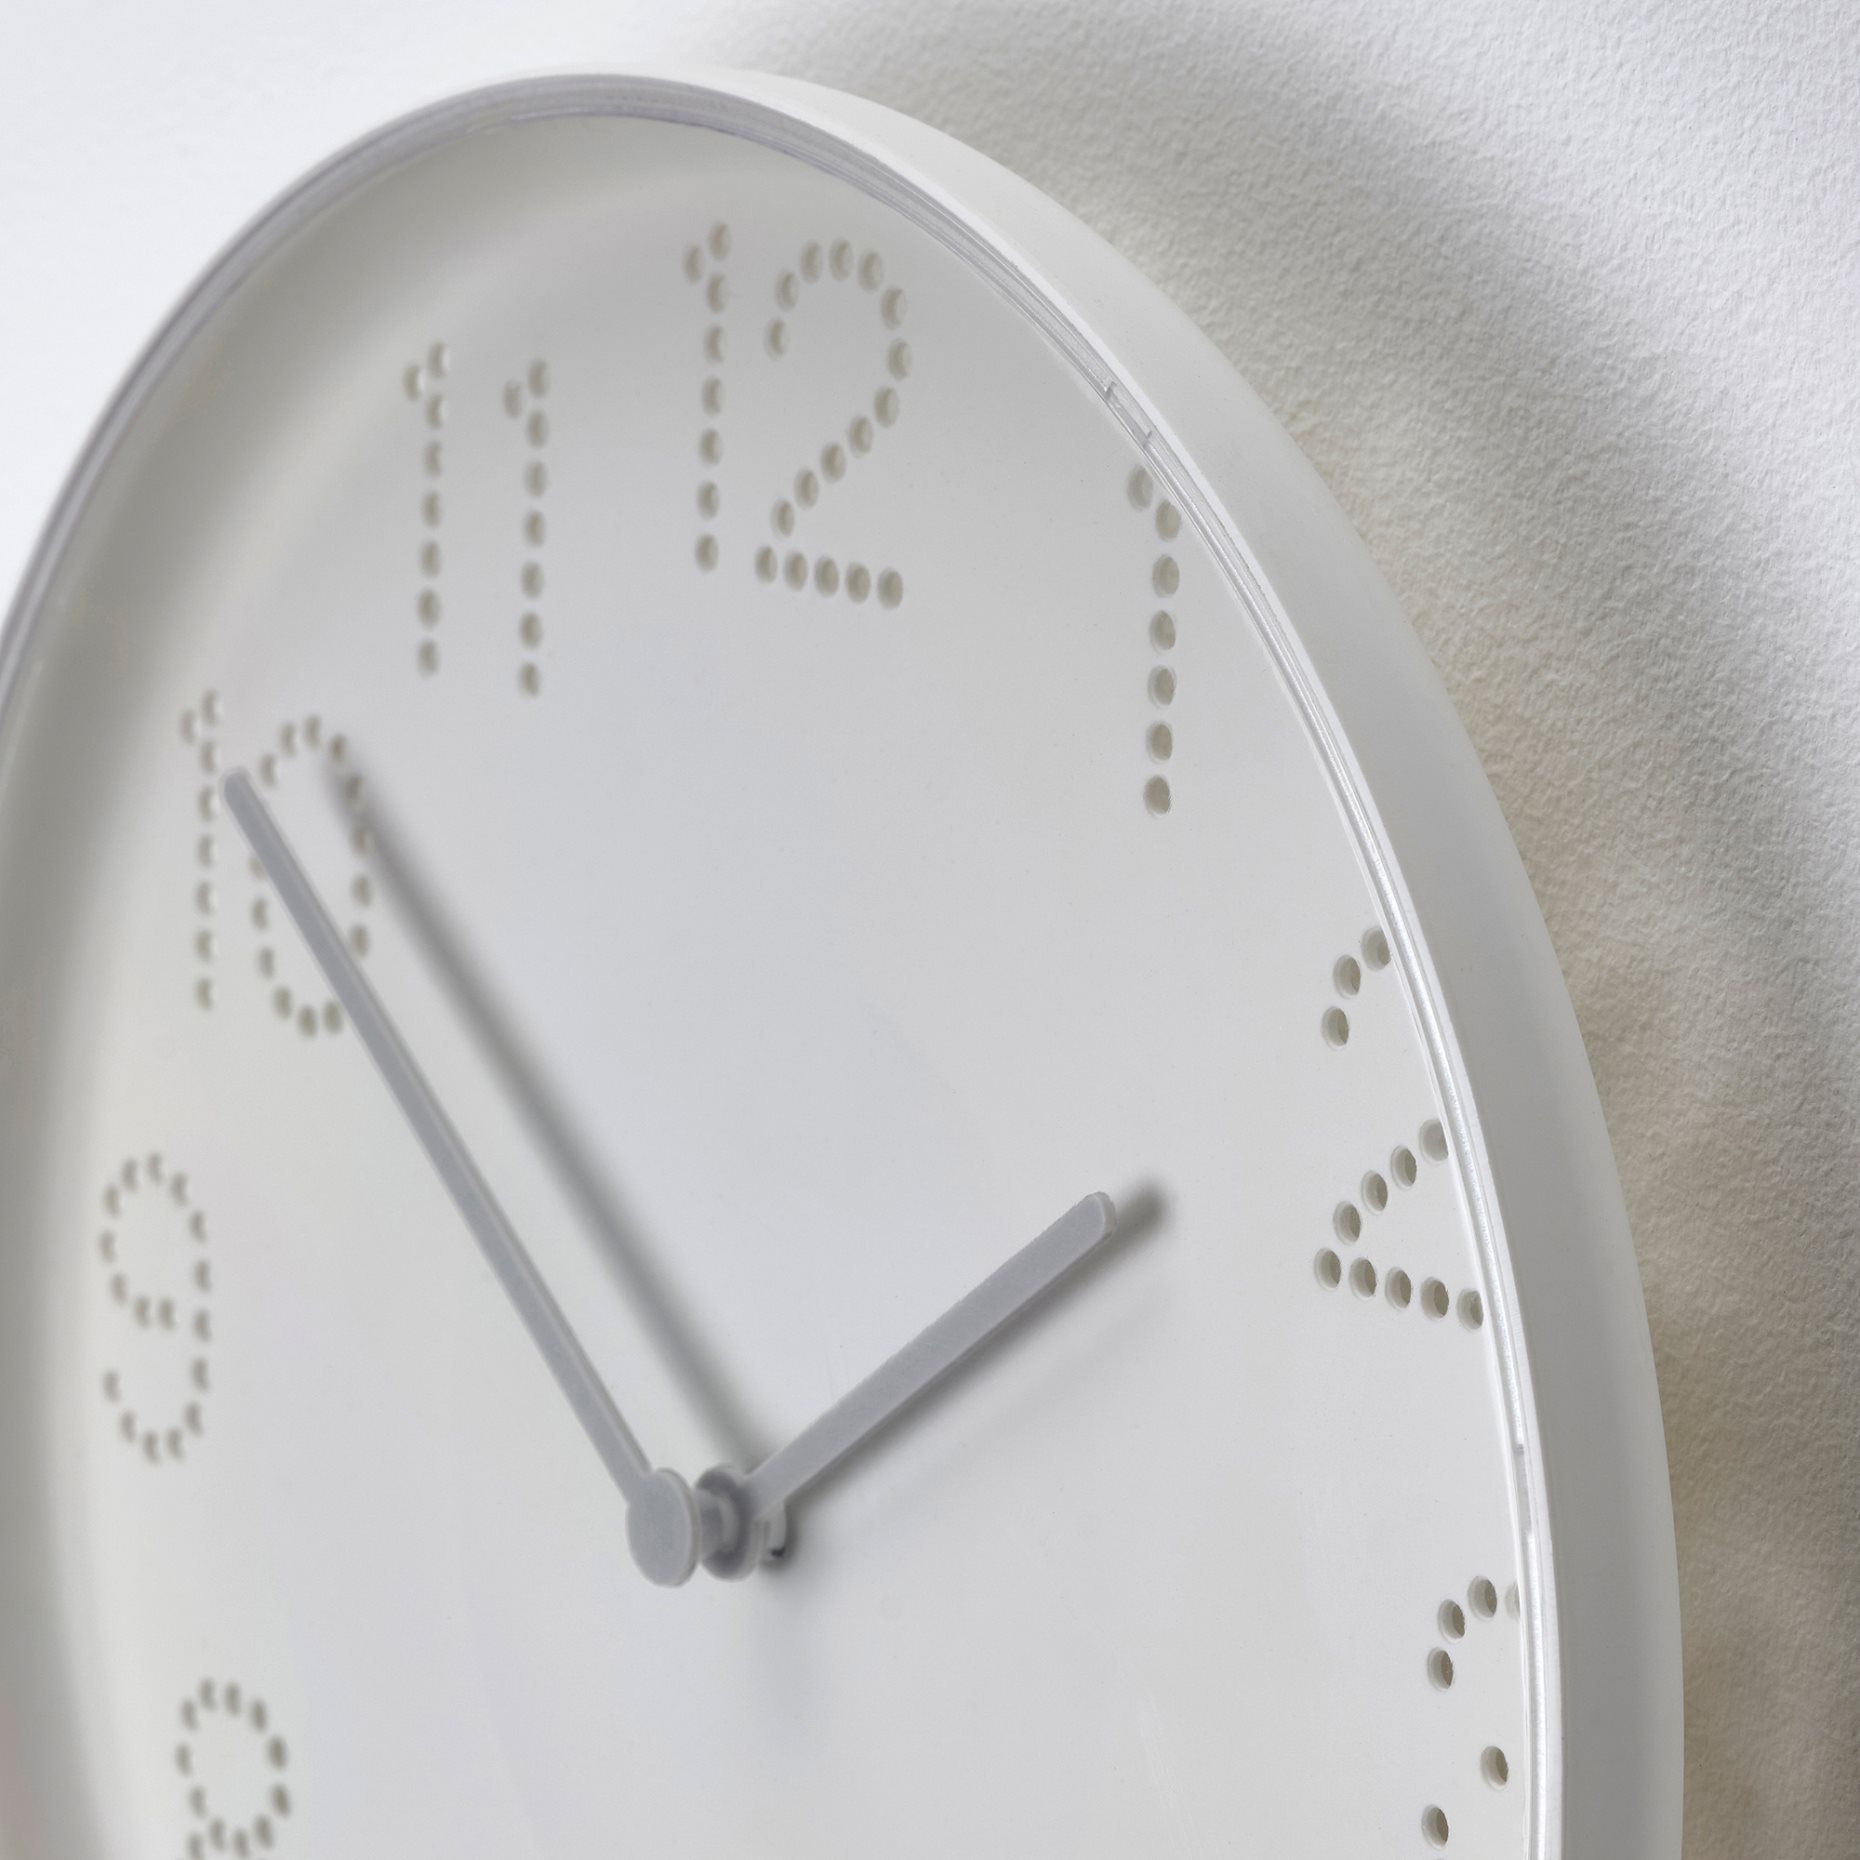 TROMMA, wall clock low-voltage, 25 cm, 305.570.78